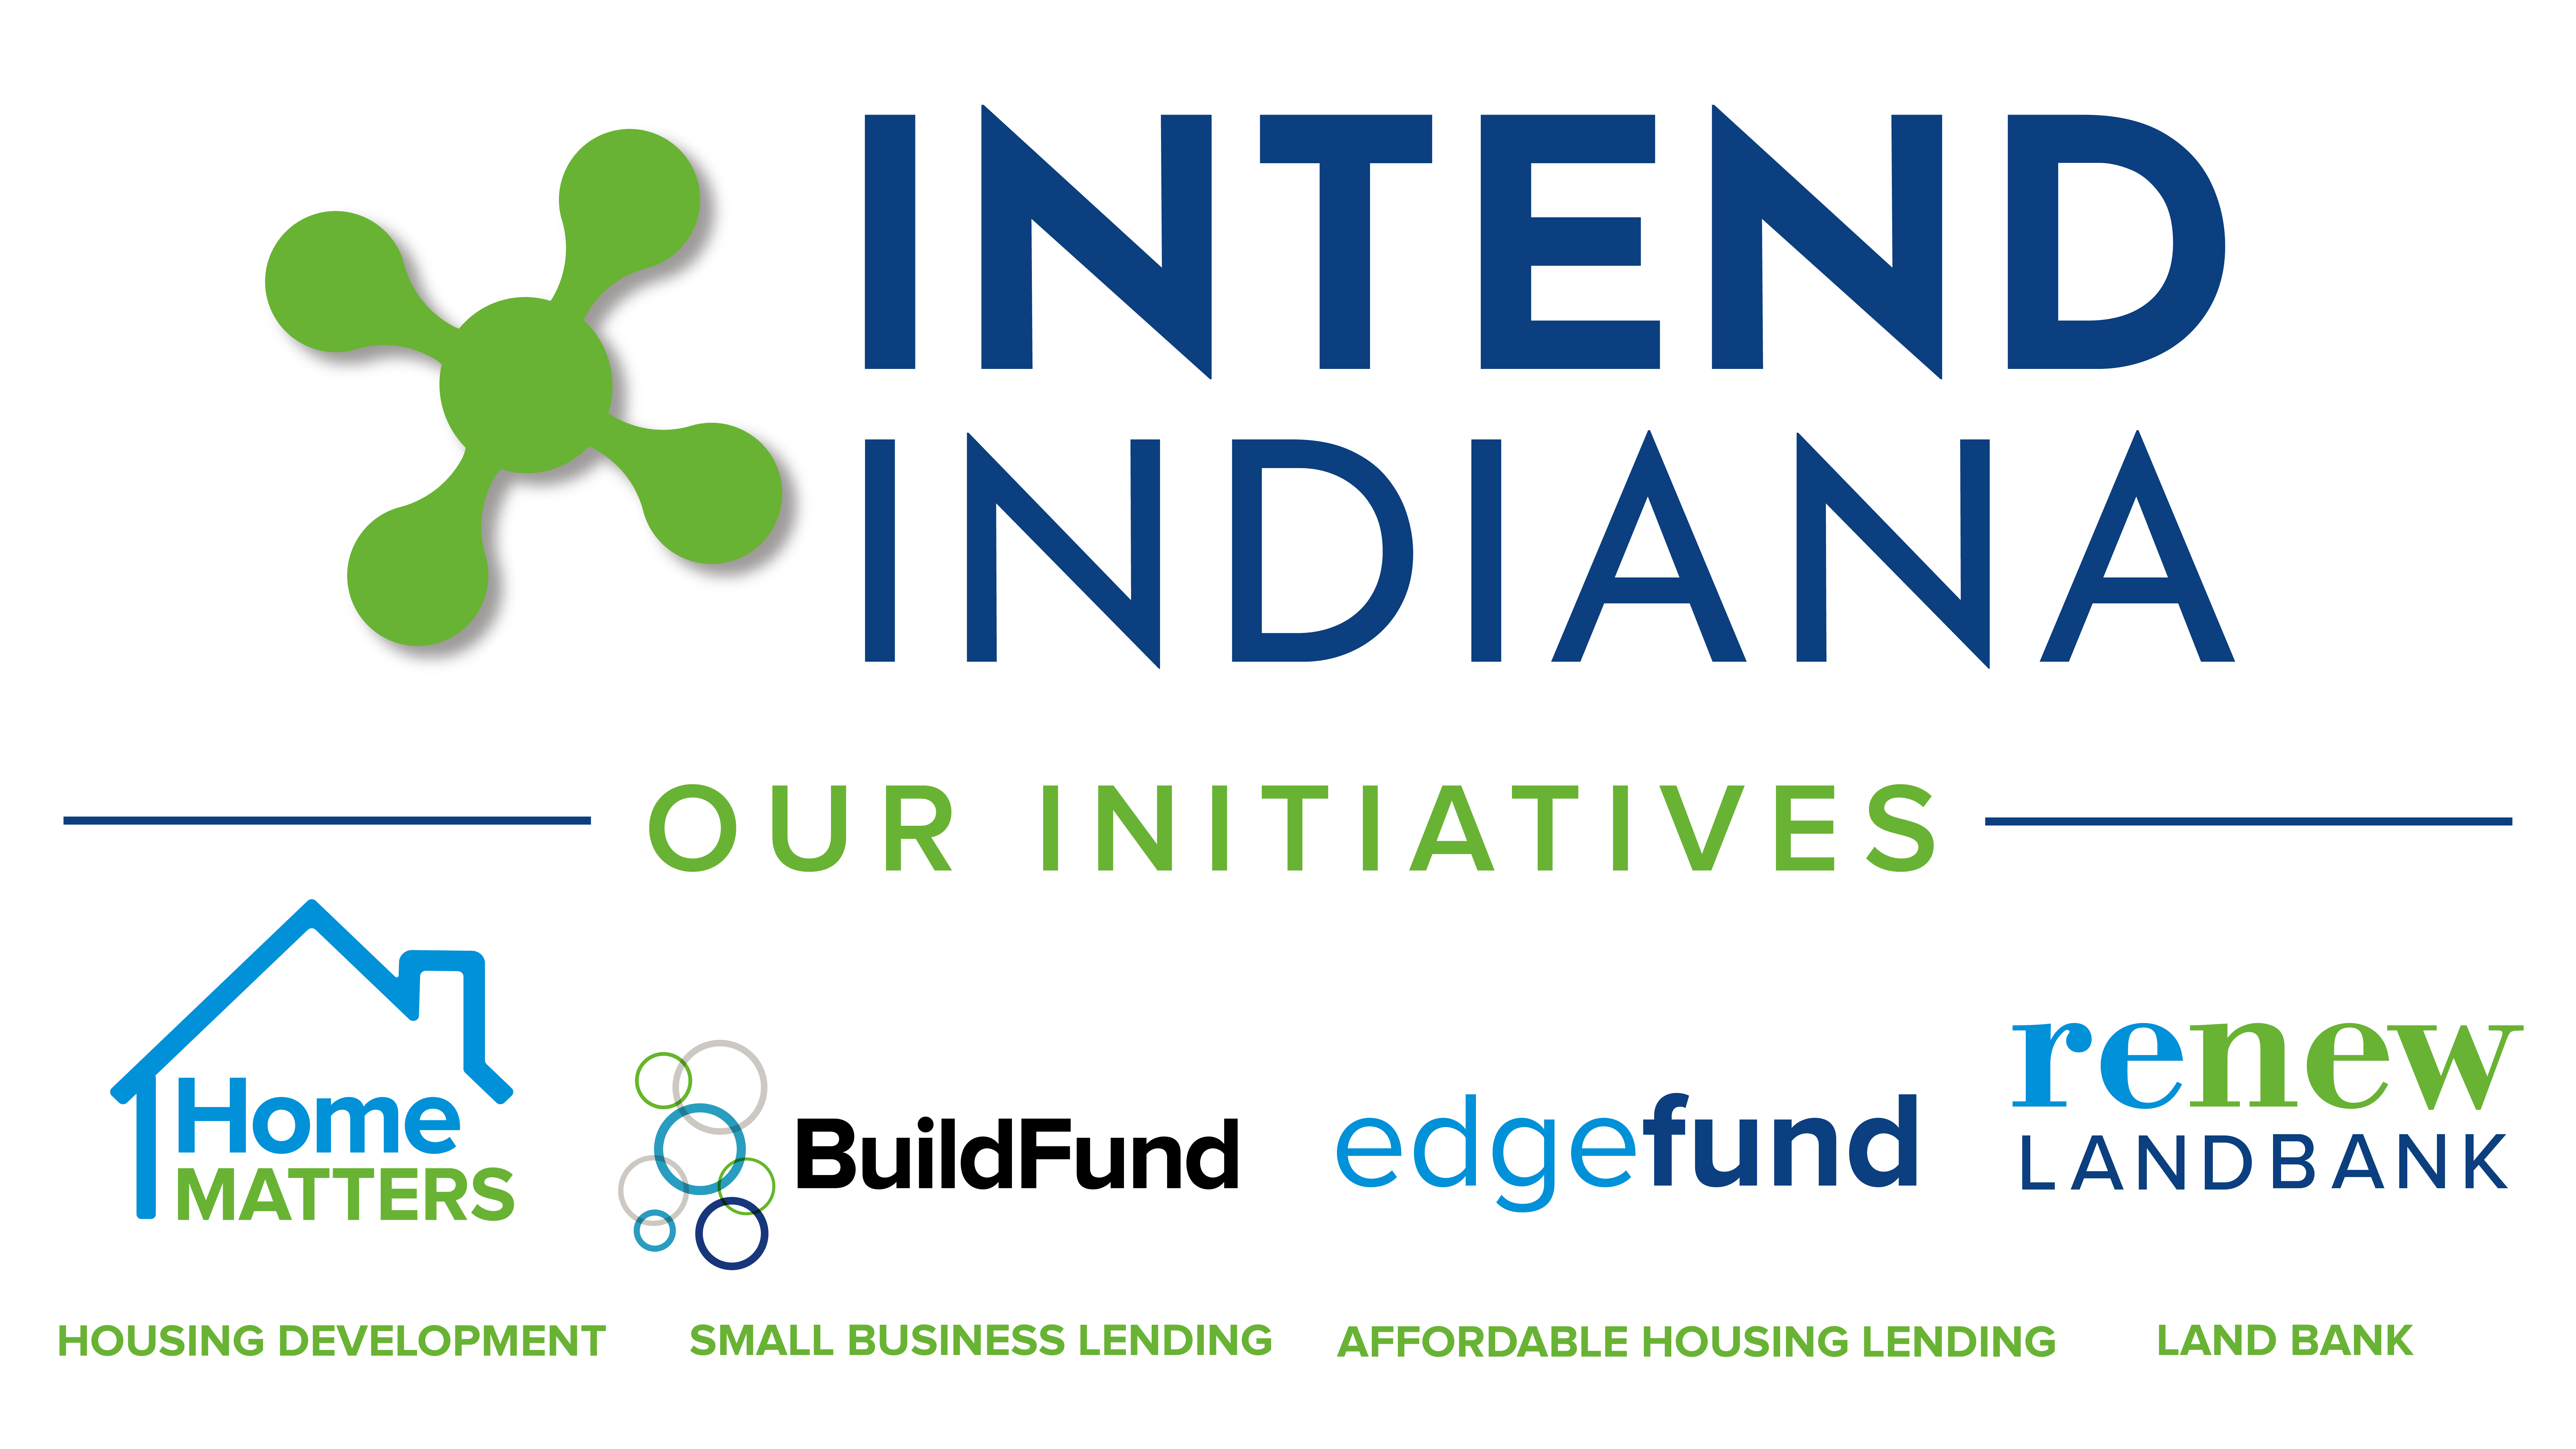 Intend Indiana initiatives